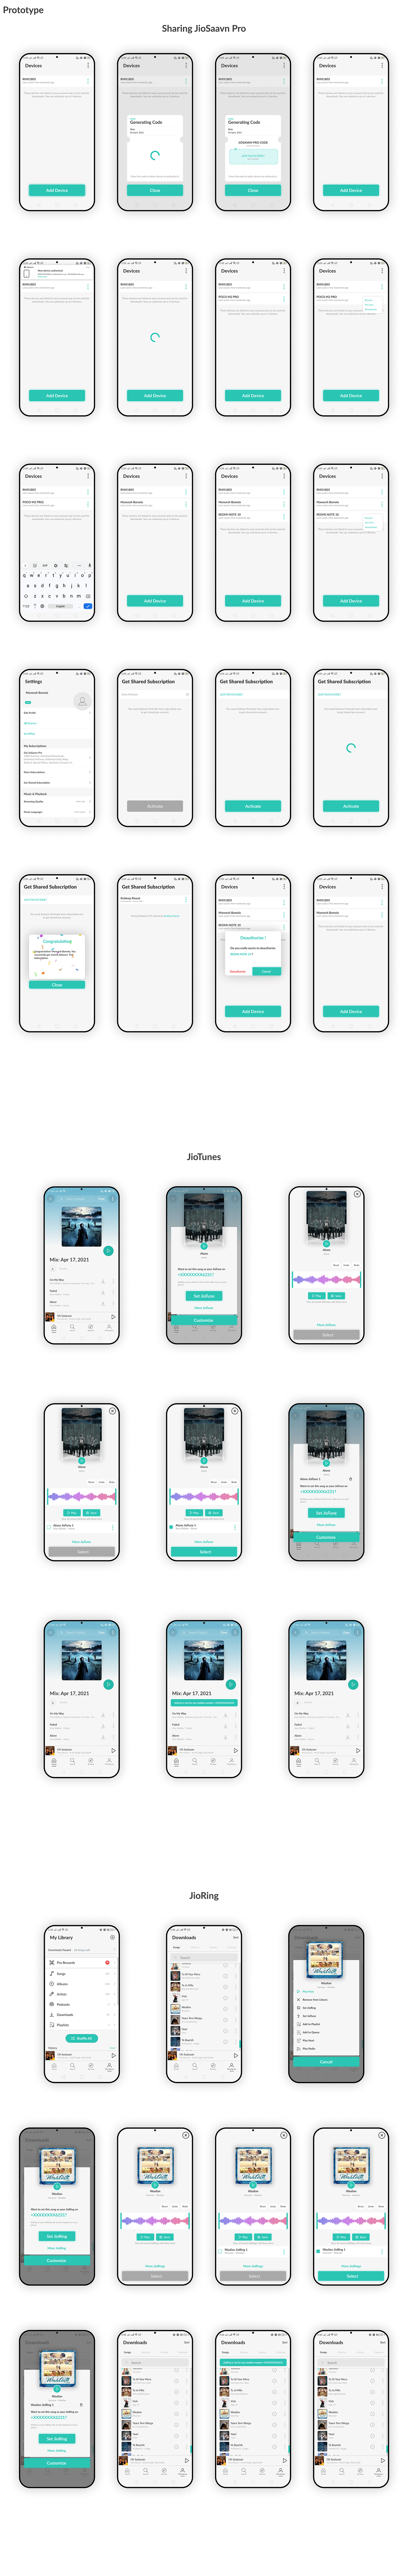 android app design app design Case Study design trend iOS app design JioSaavn LATEST DESIGN TREND mobile app design music app case study Music app design